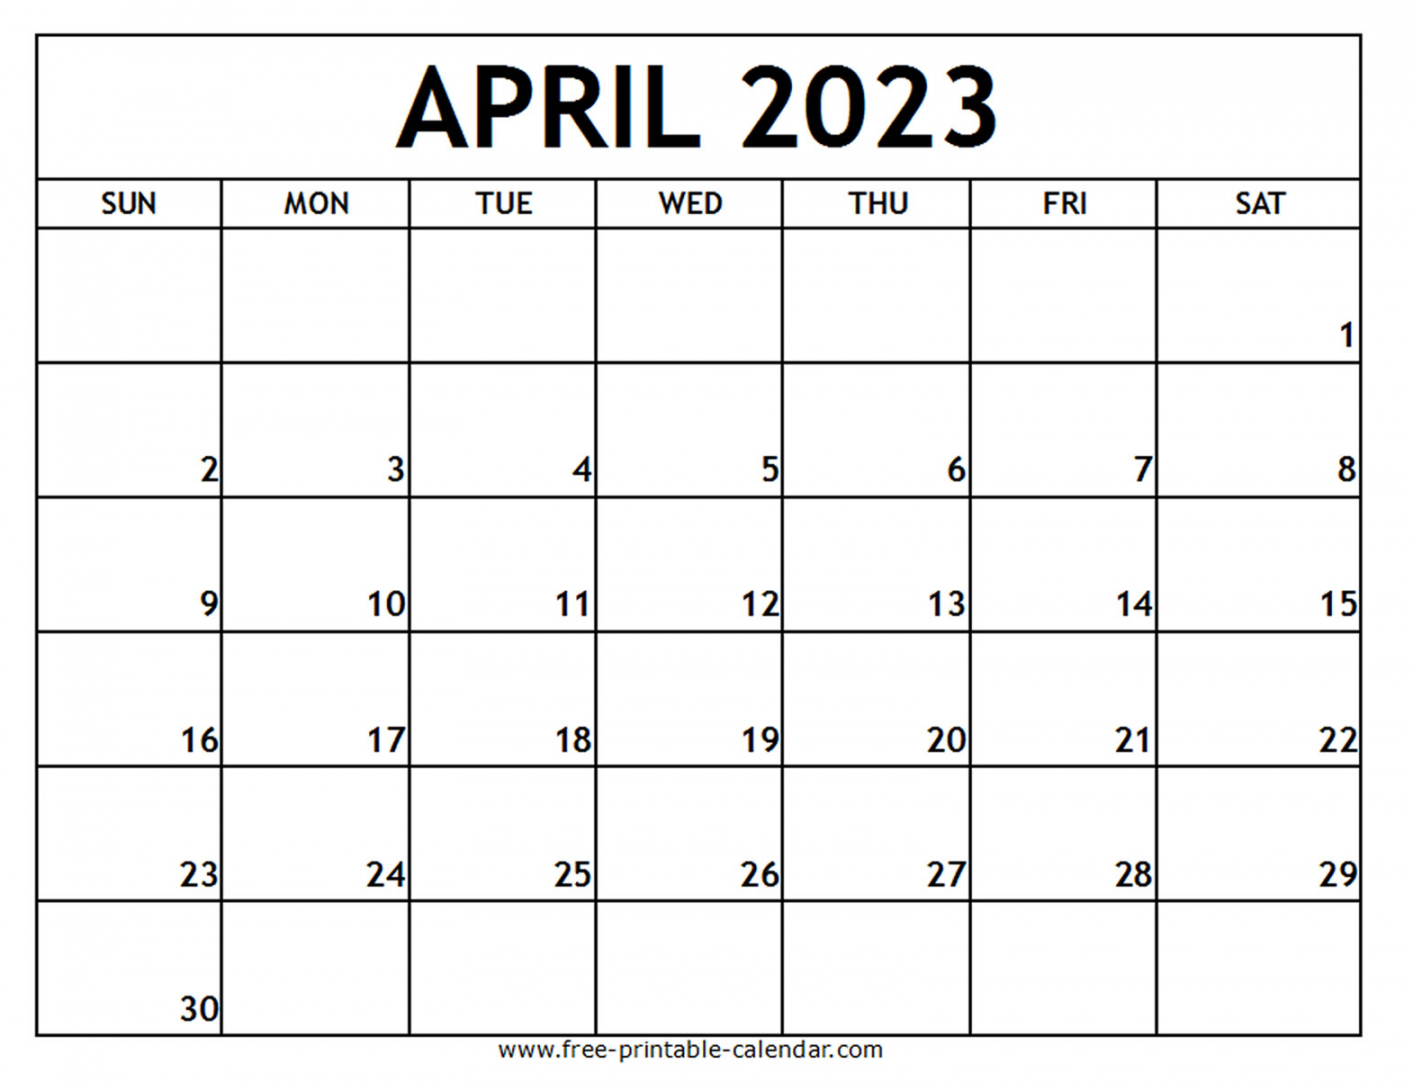 Free Printable Calendar April 2023 - Printable - April  Printable Calendar - Free-printable-calendar